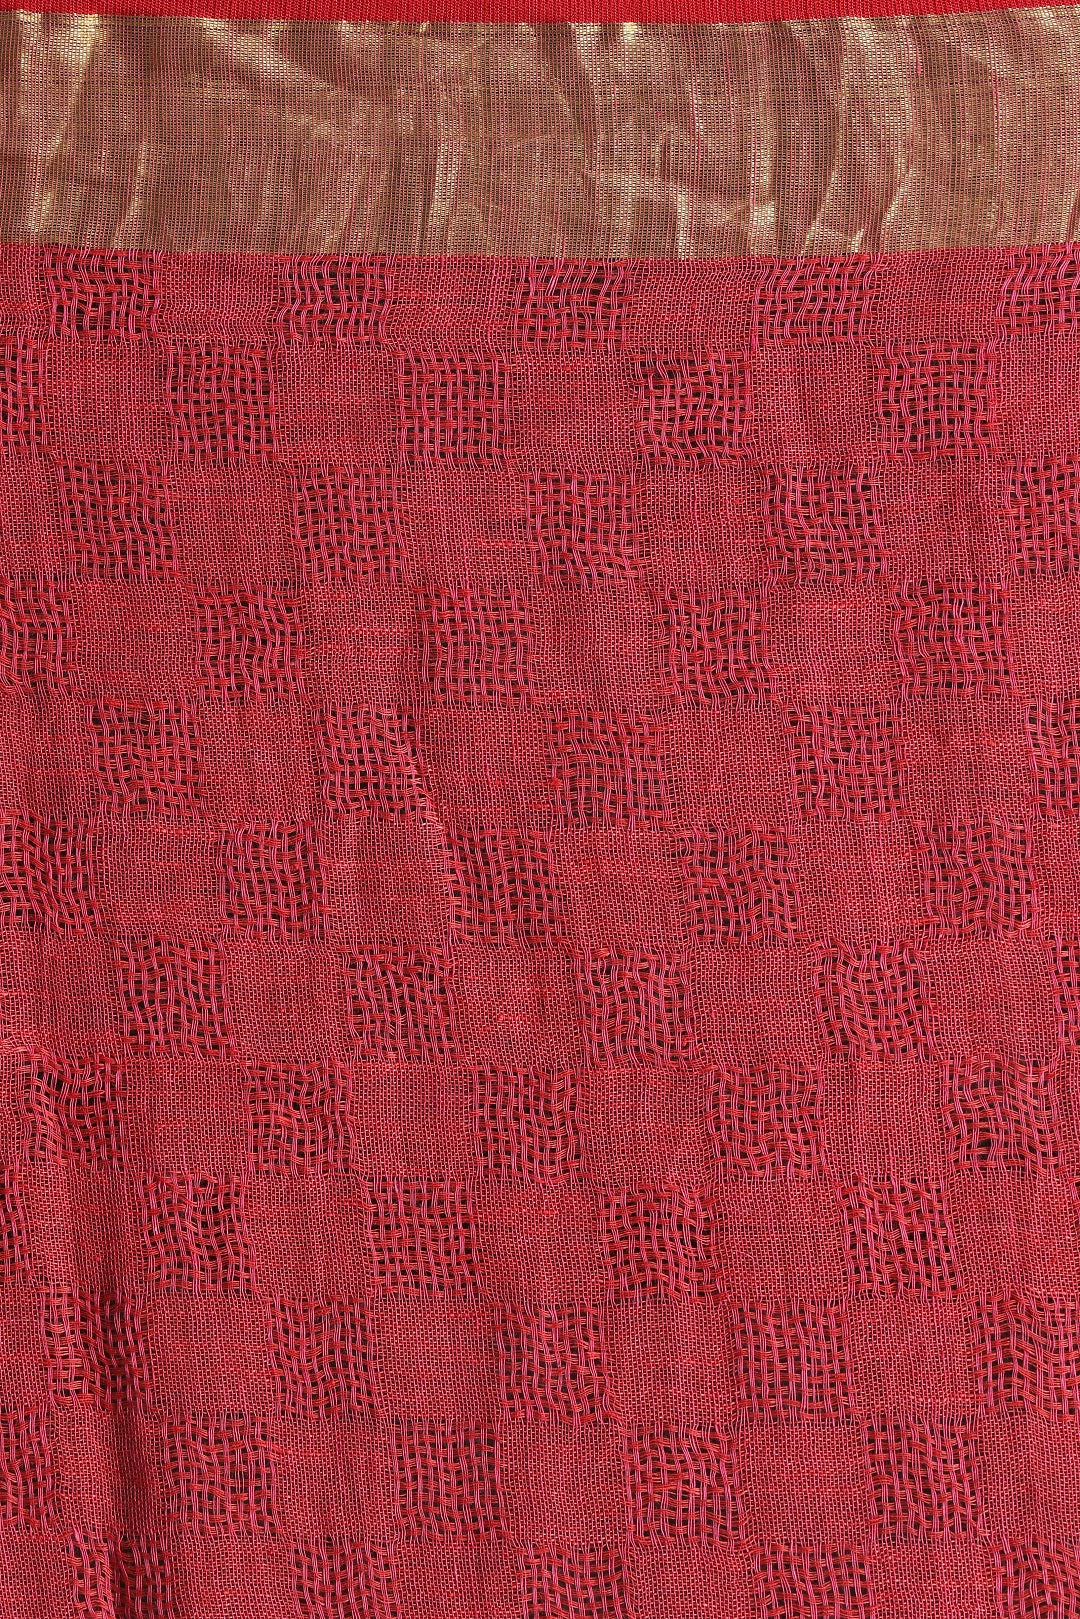 Striking Red Linen Saree With Self Woven Design and Zari Border